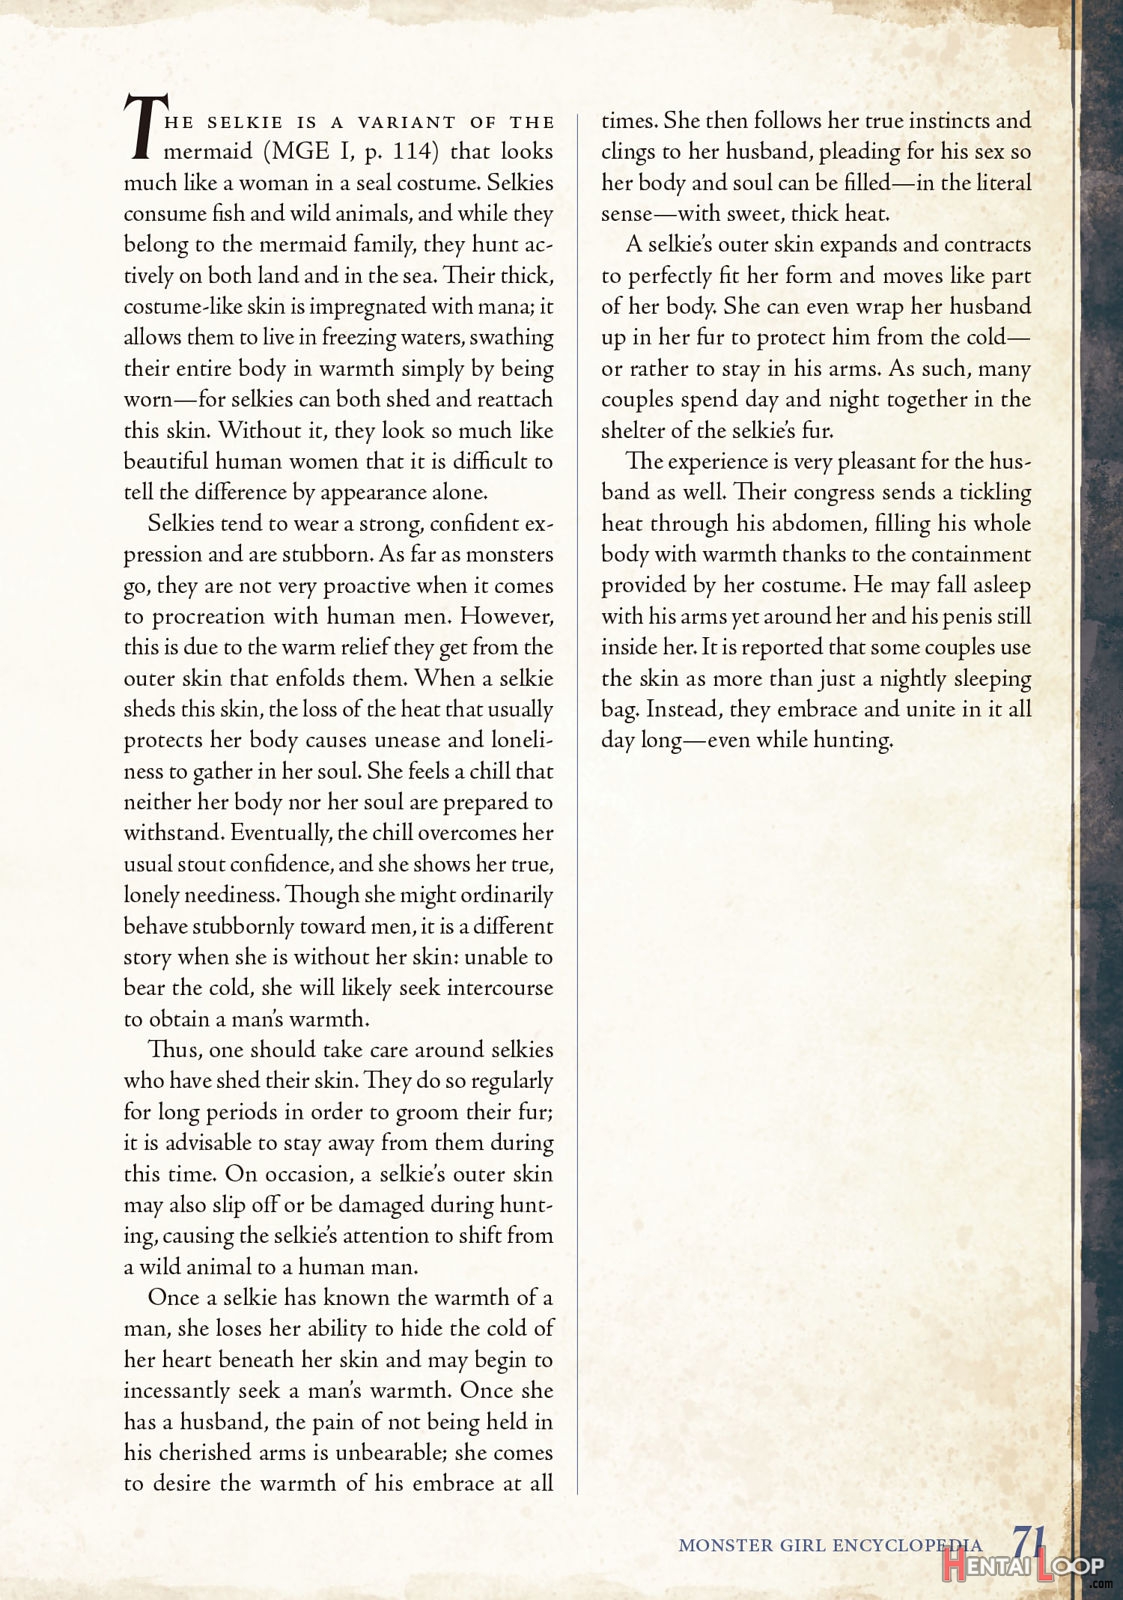 Monster Girl Encyclopedia Vol. 2 page 72